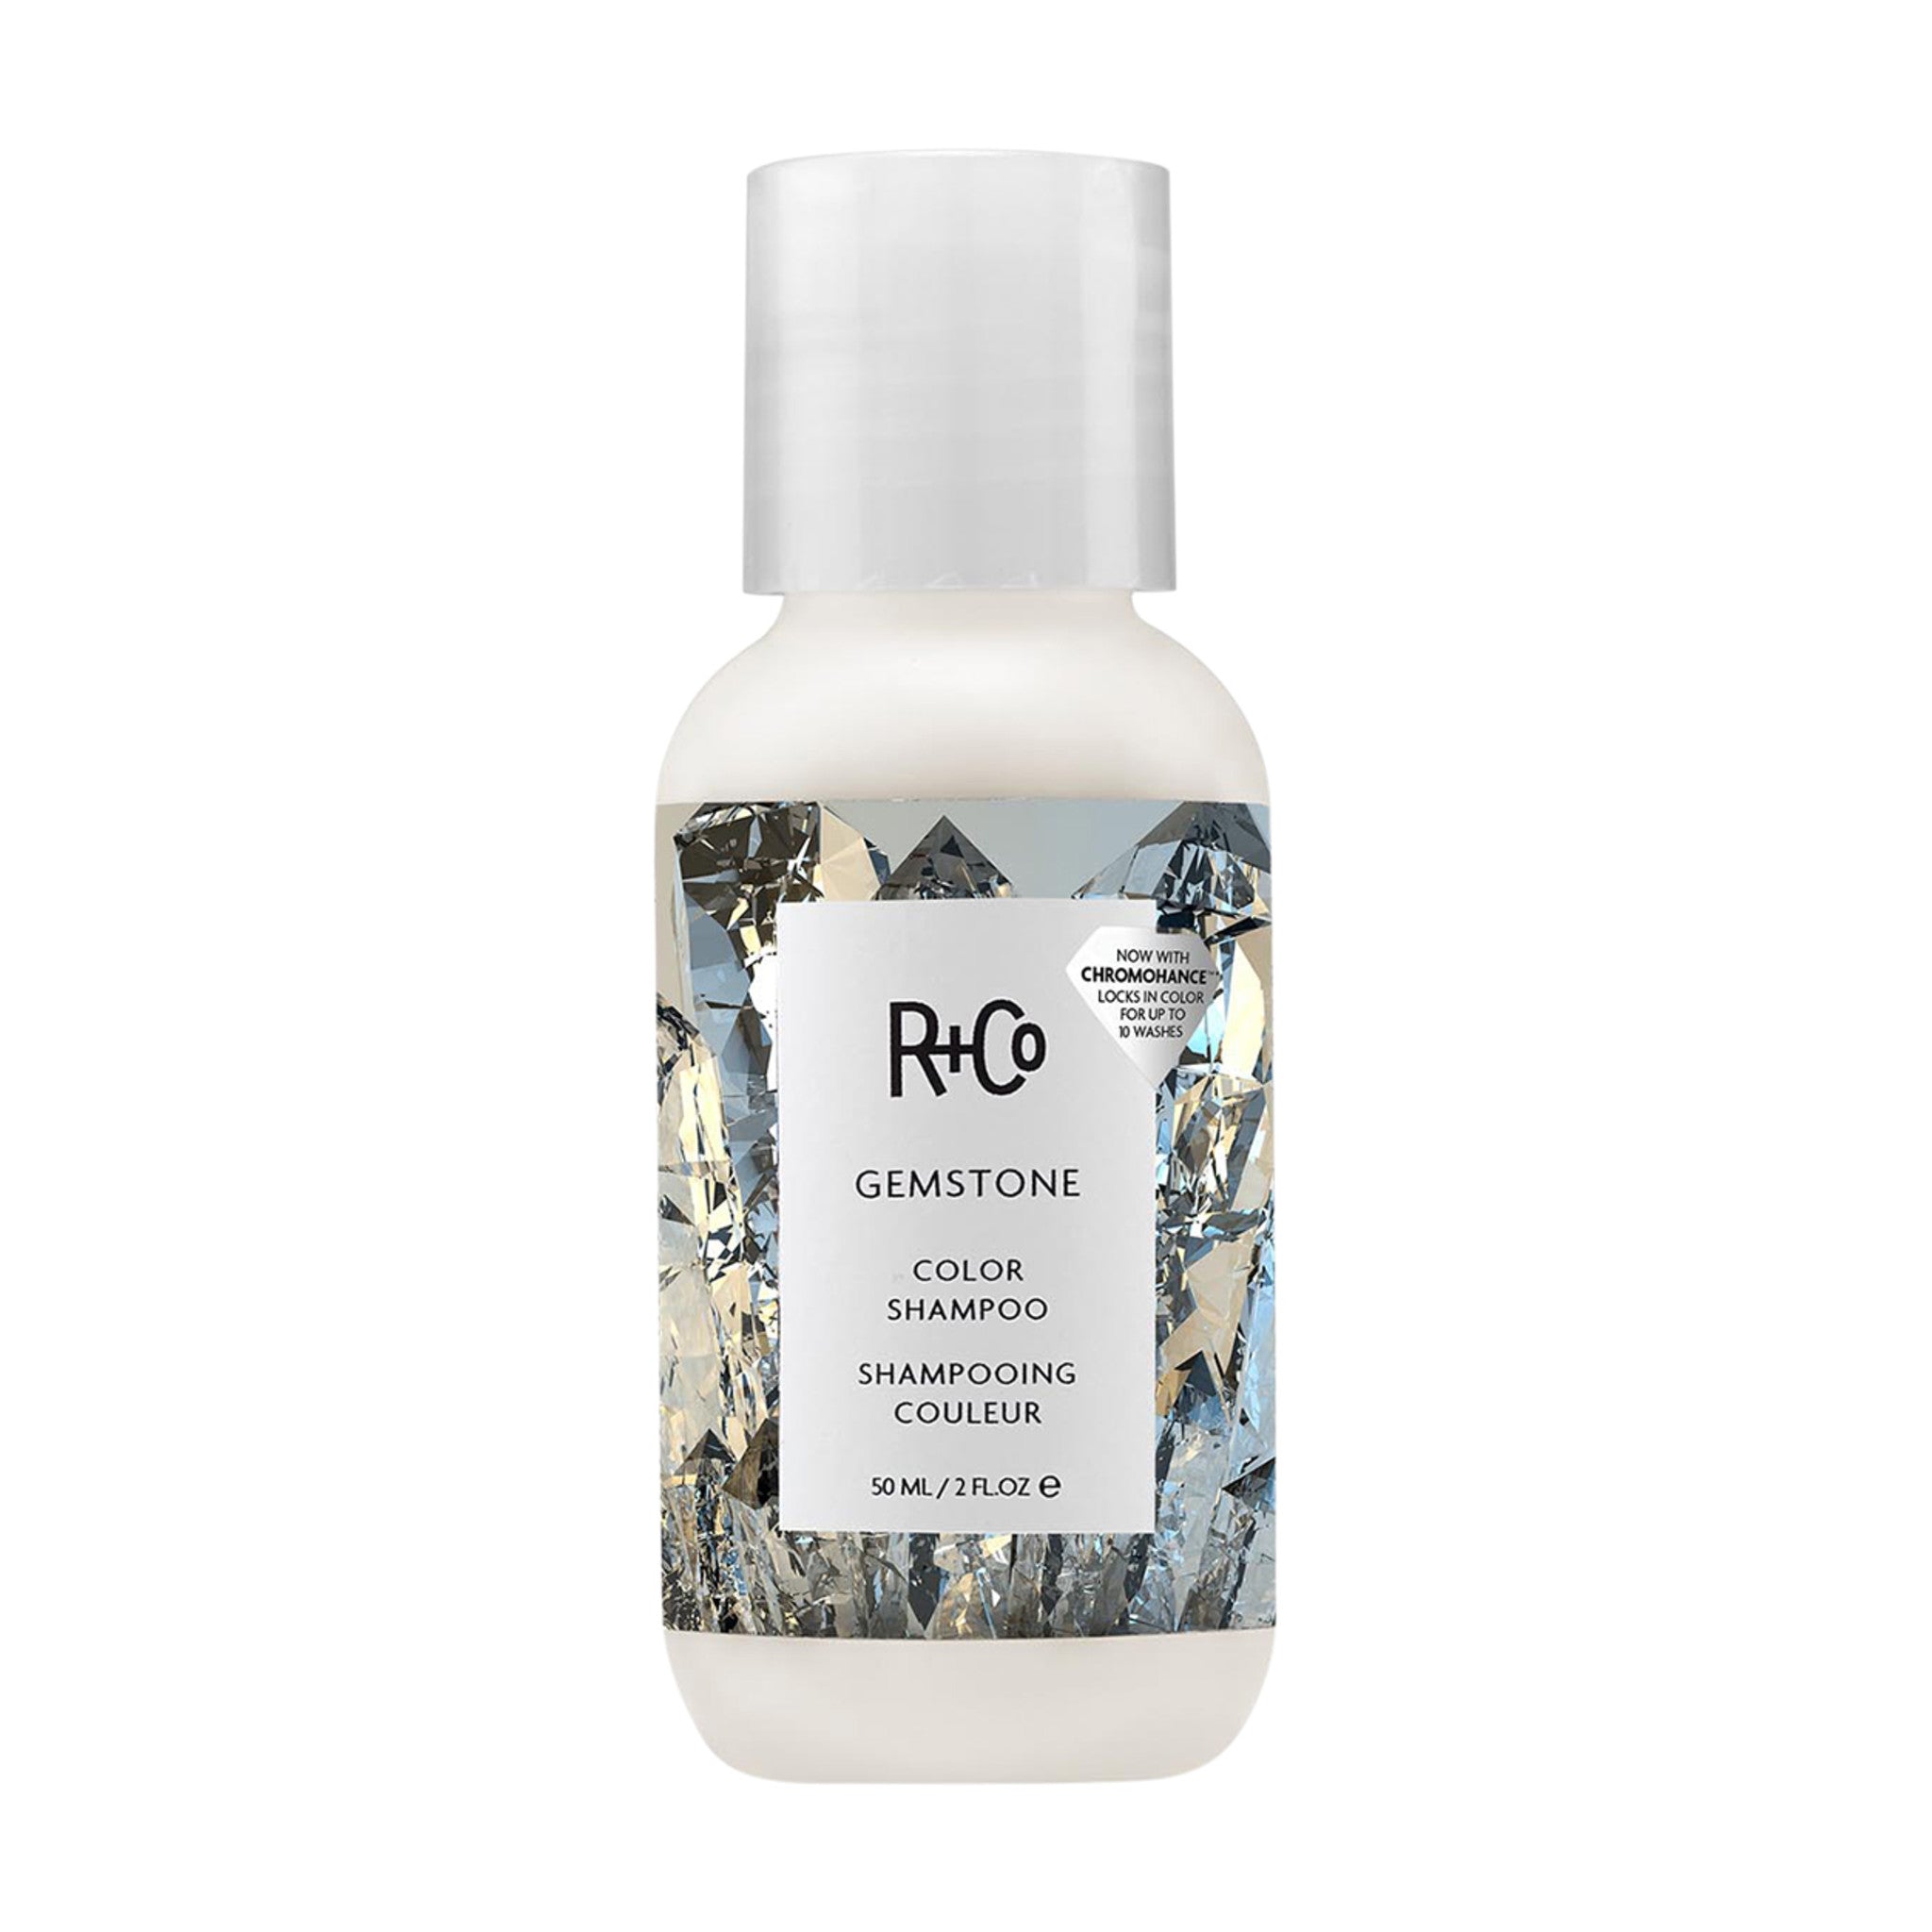 R+Co Gemstone Color Shampoo Size variant: 2 fl oz | 50 ml main image.